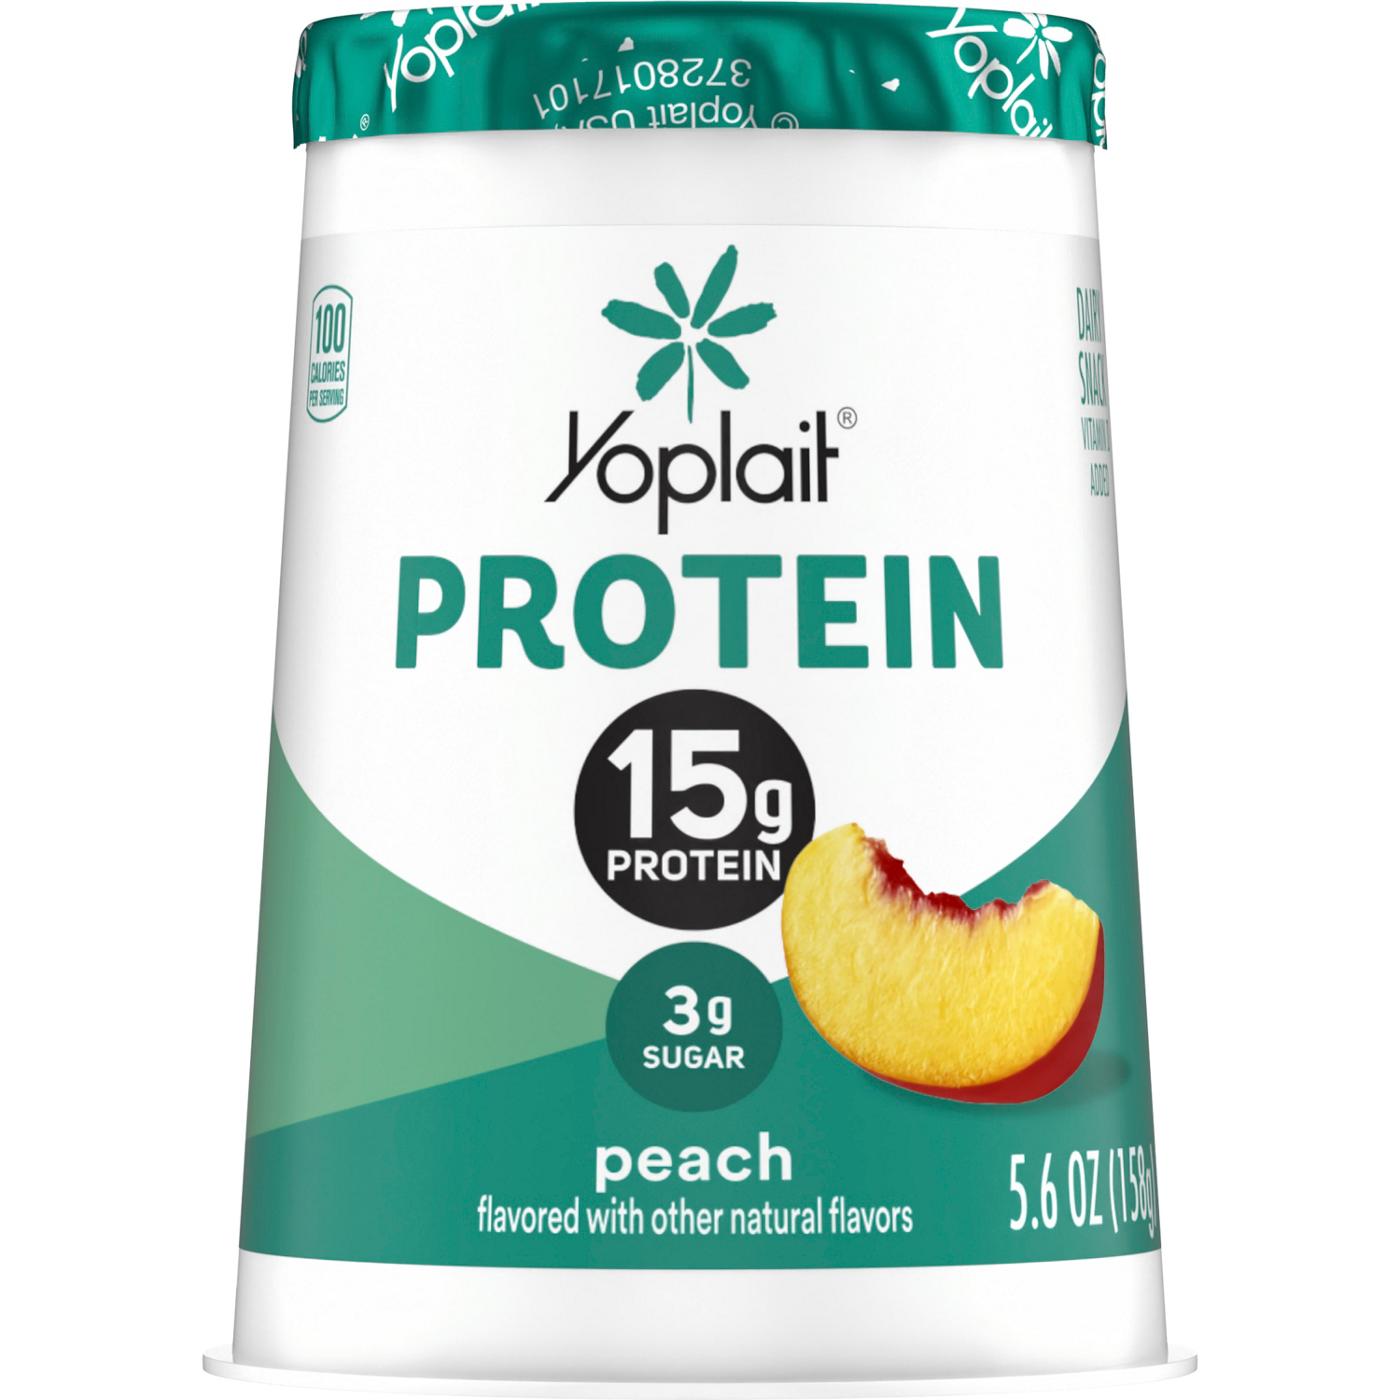 Yoplait 15g Protein Peach Yogurt; image 1 of 4